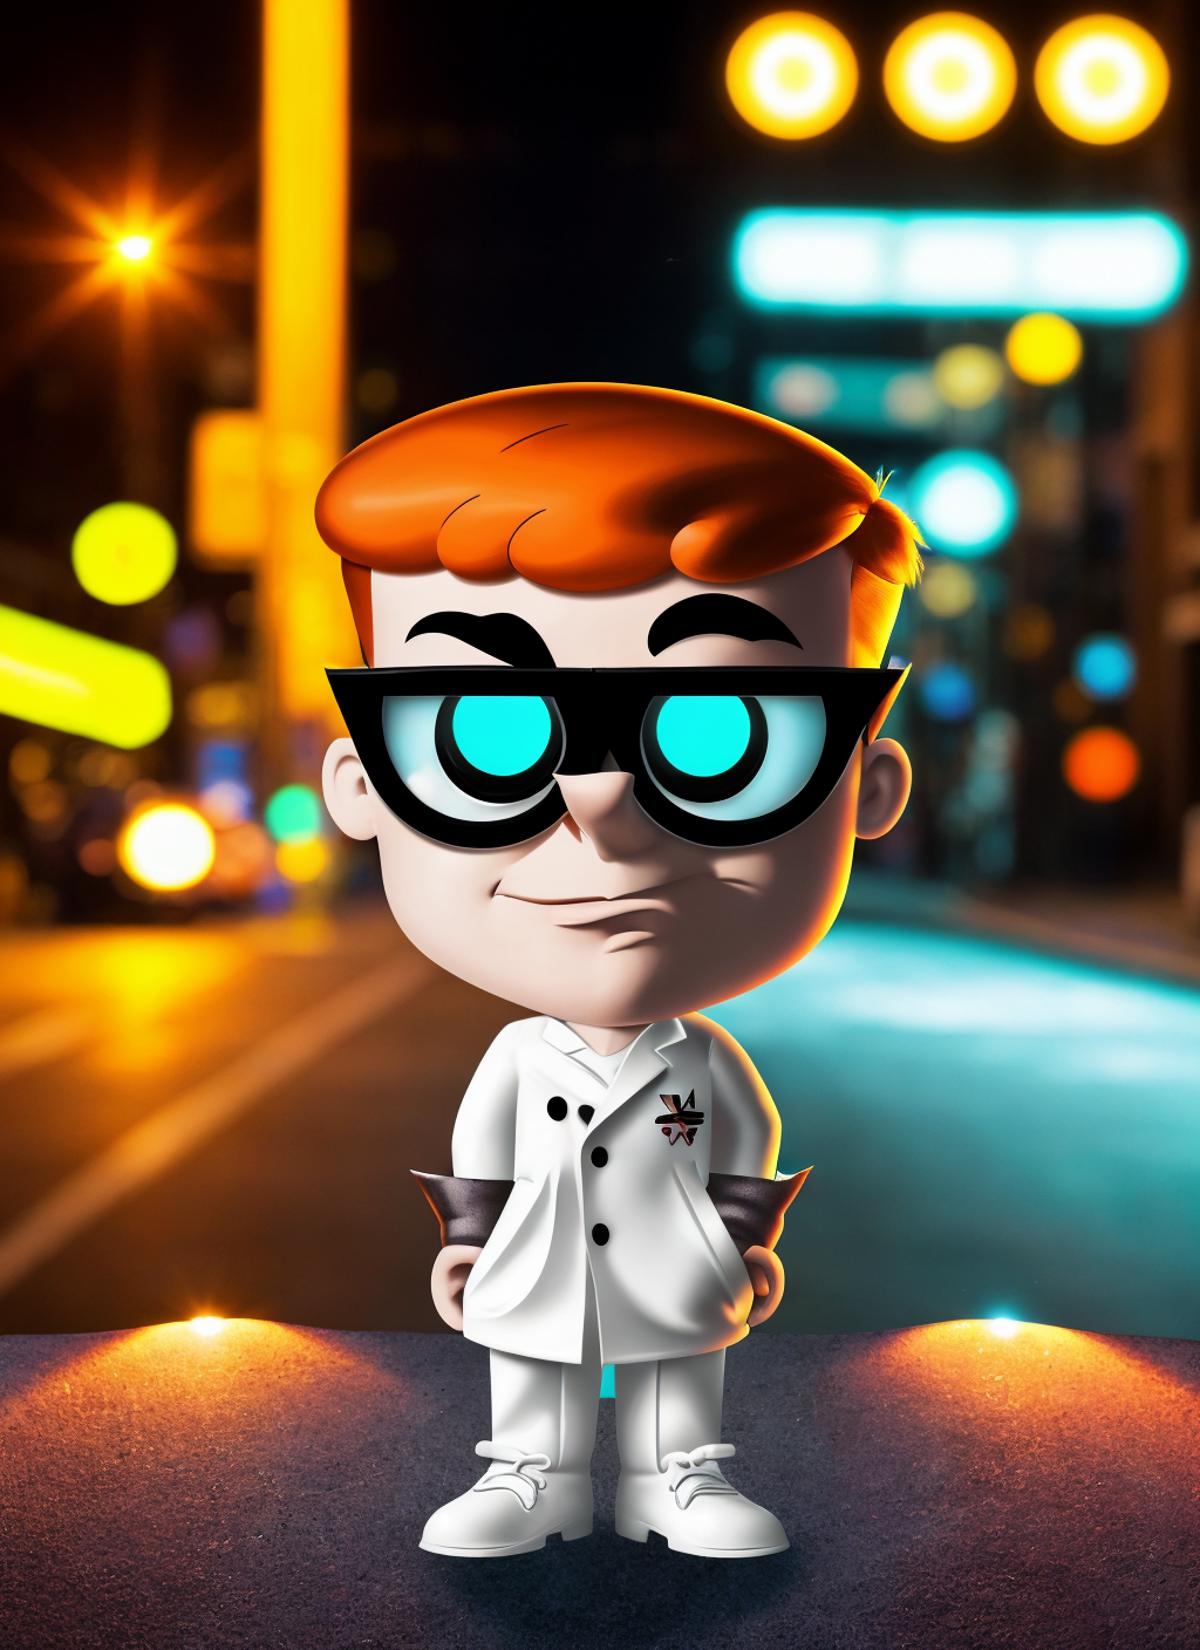 Dexter [dexter's laboratory] image by 32Bitshifter